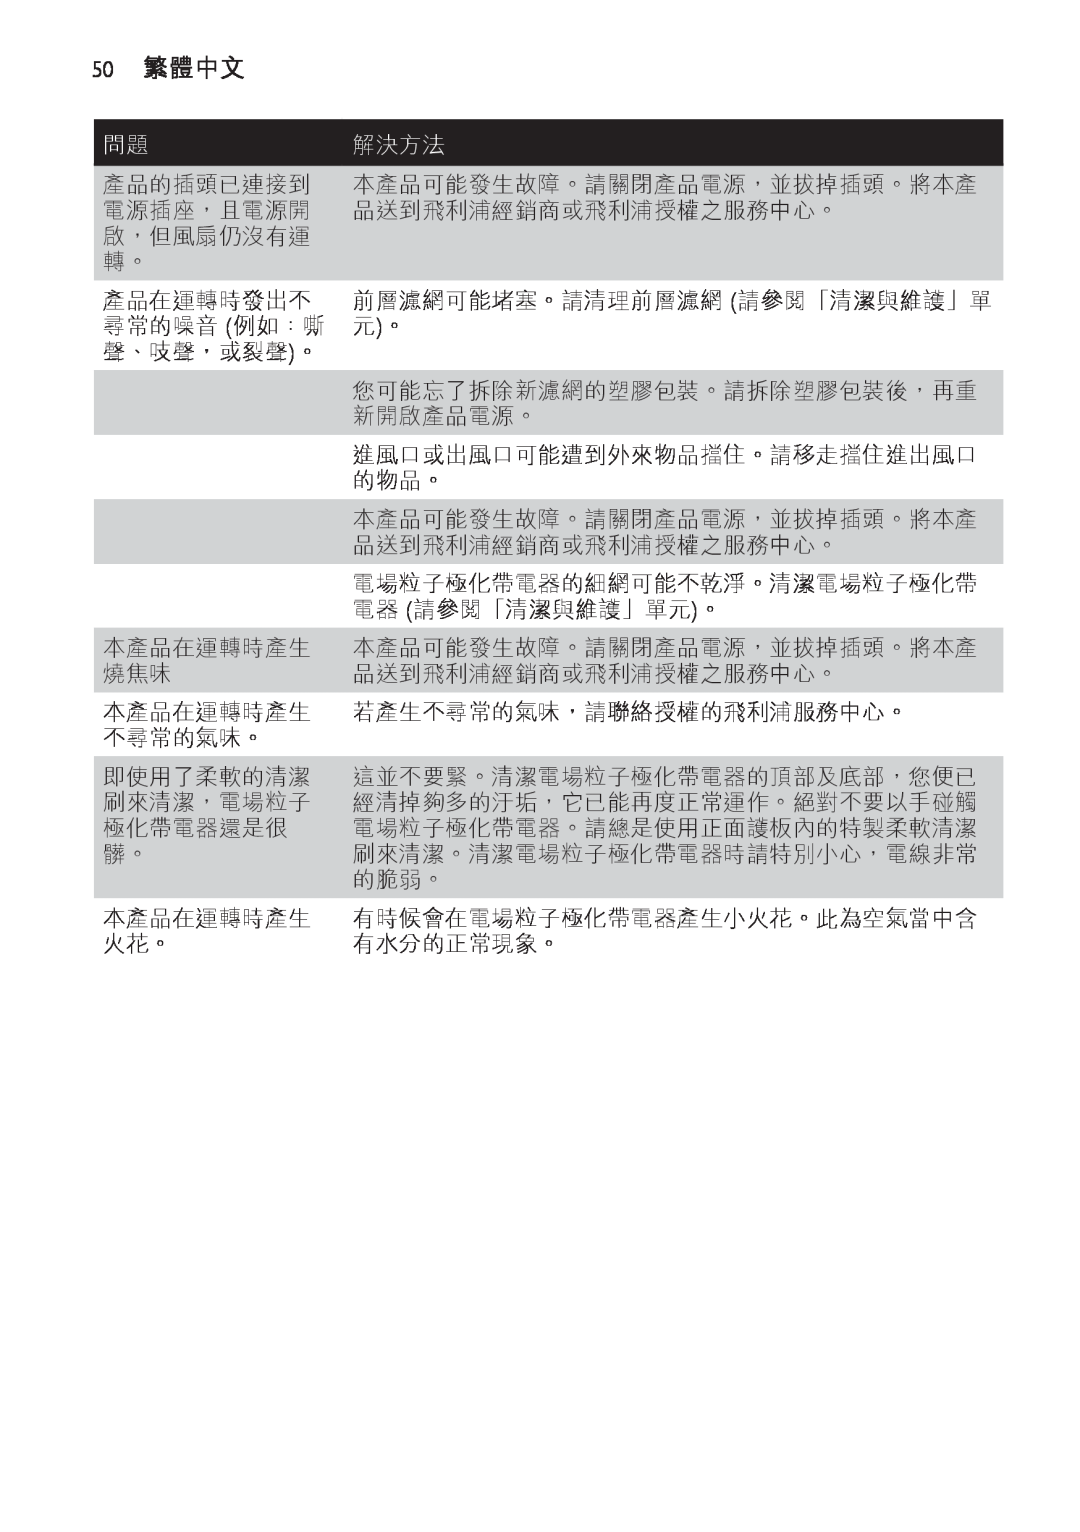 Philips AC4118, AC4108 manual 50繁體中文, 問題解決方法 